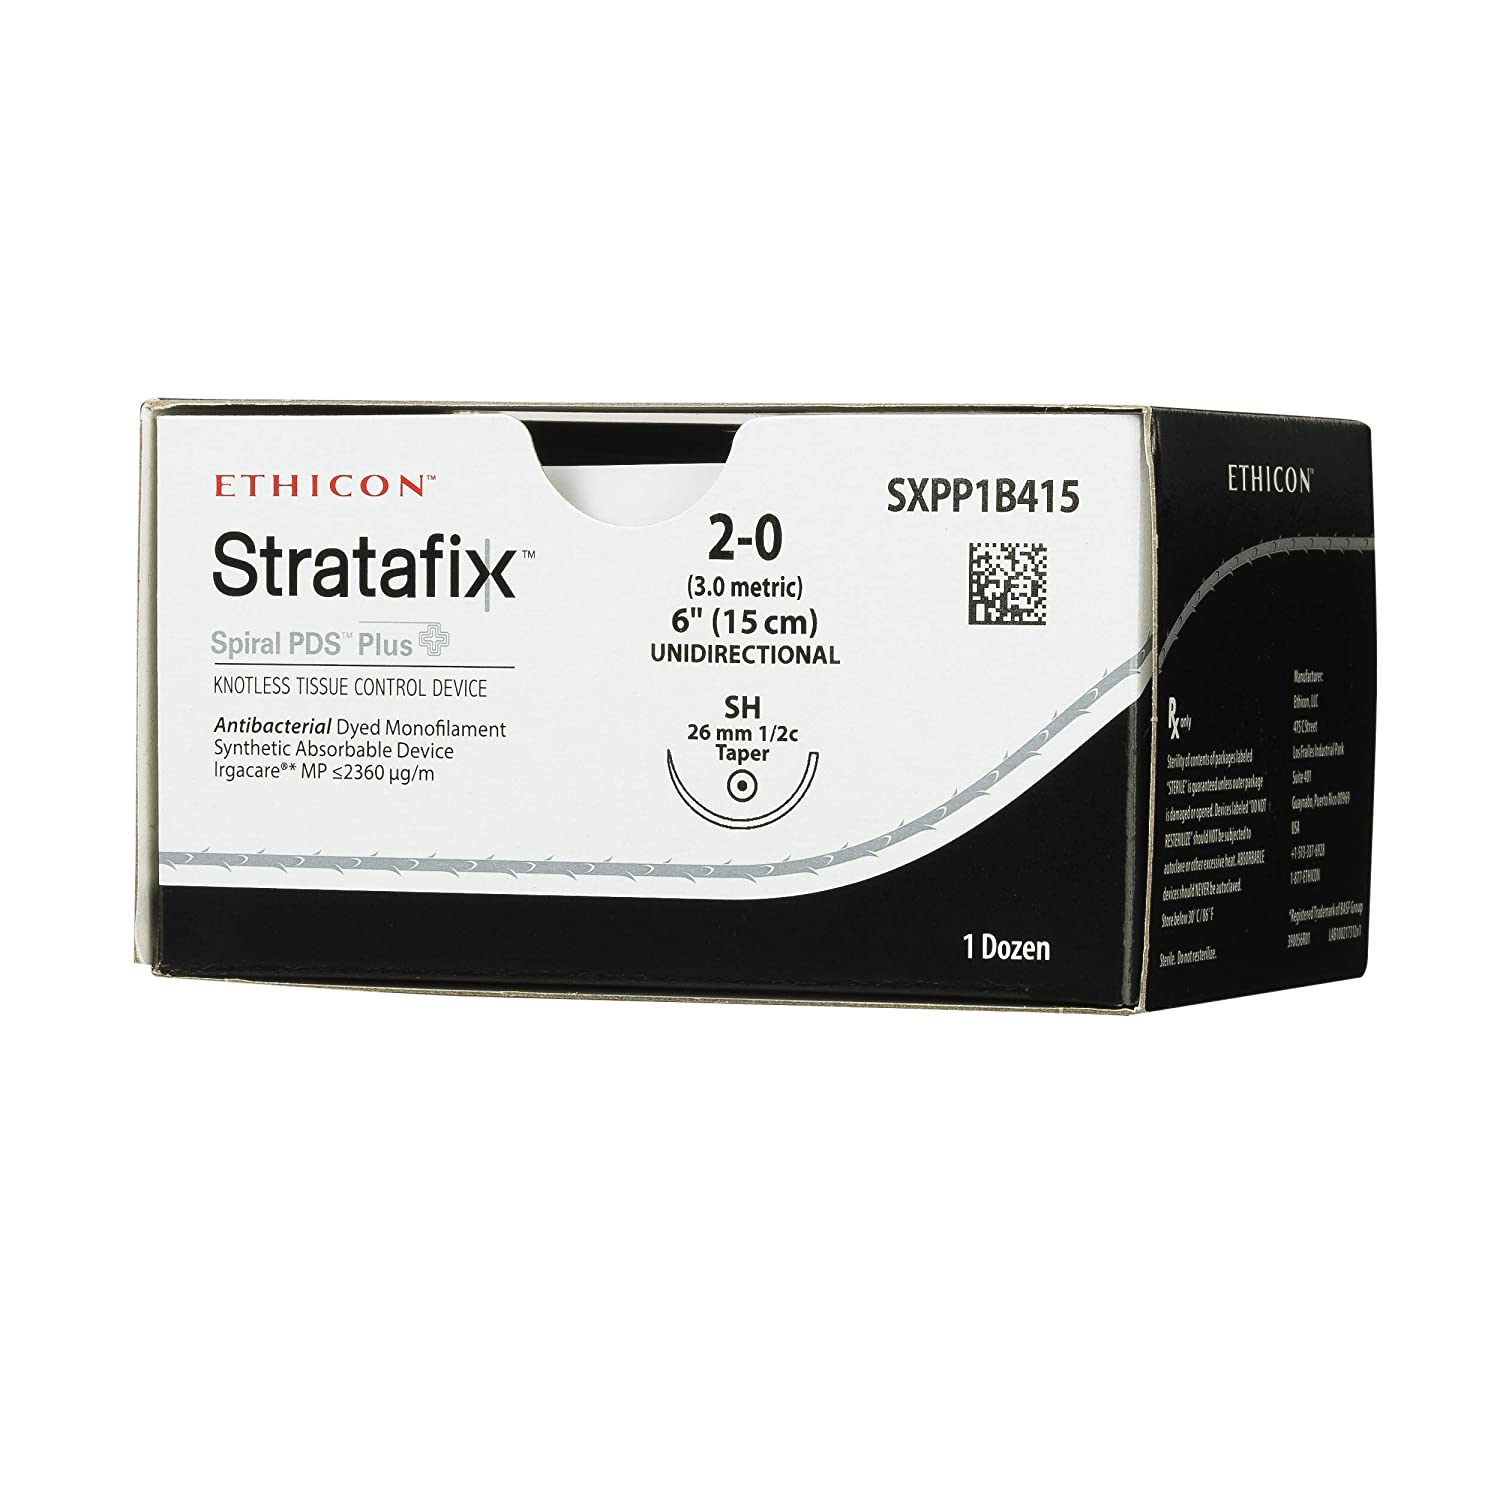 STRATAFIX SPIRAL PDS+ TENSILE 2-0 15CM SH